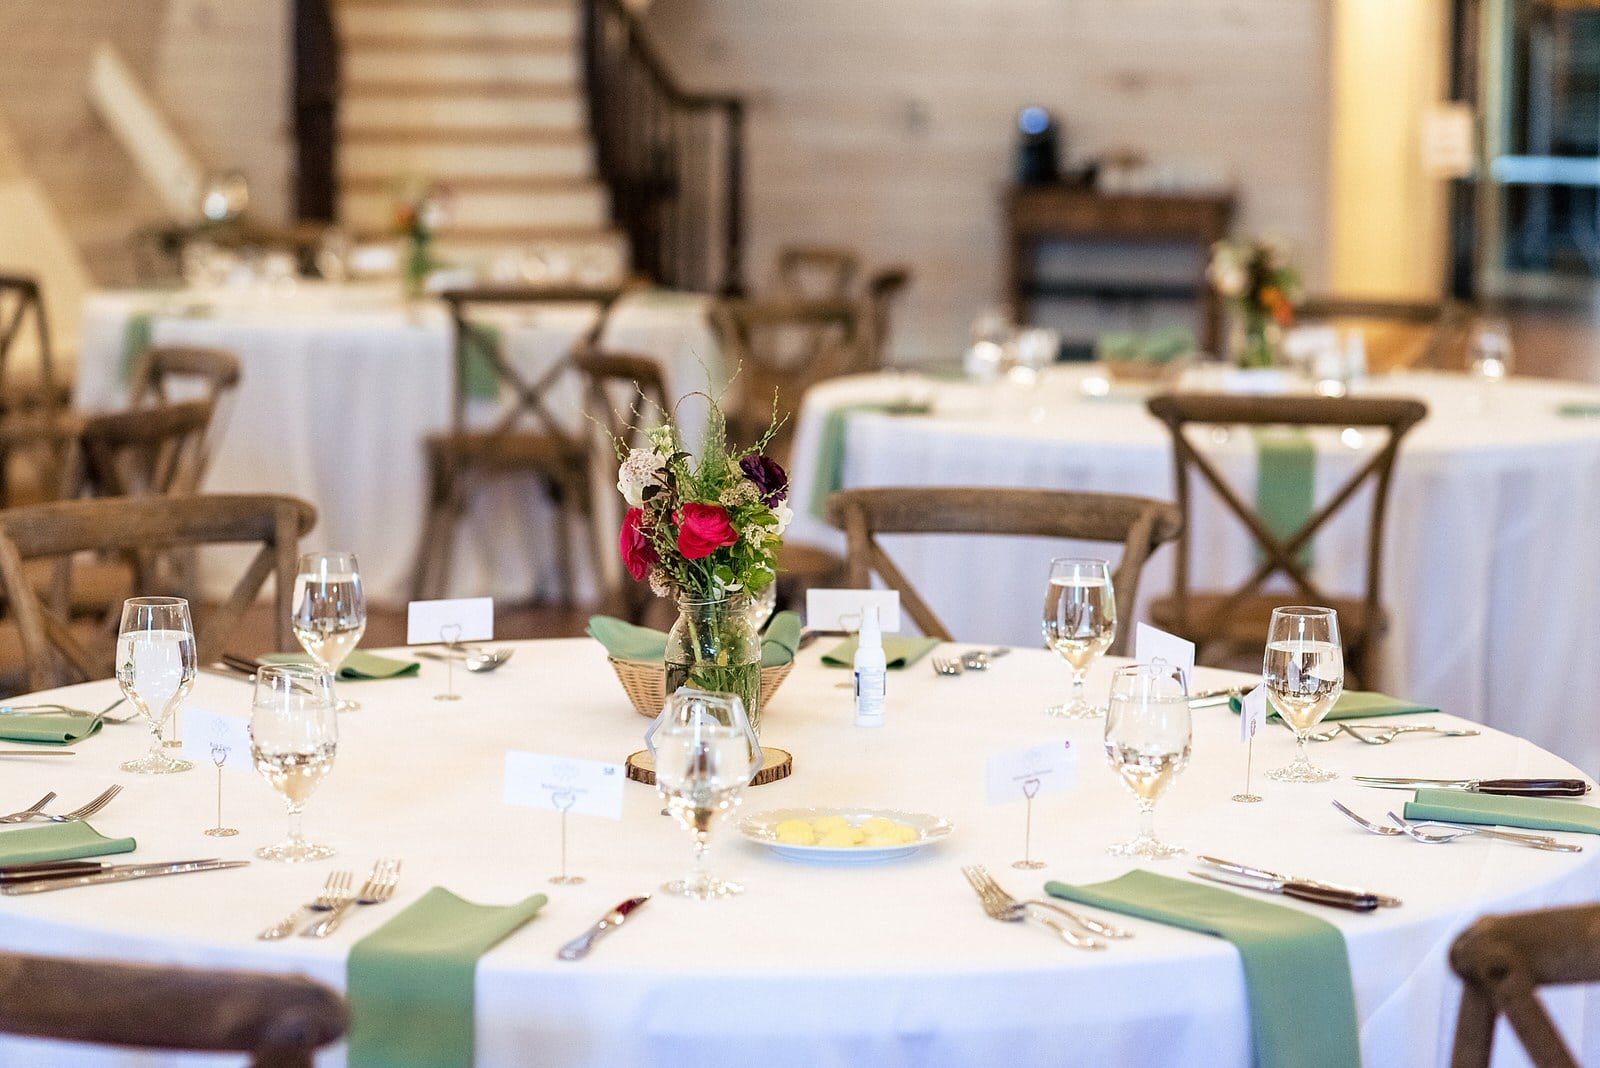 Wakefield Barn Wedding Reception - Green & White wedding reception decor - Wedding inspiration